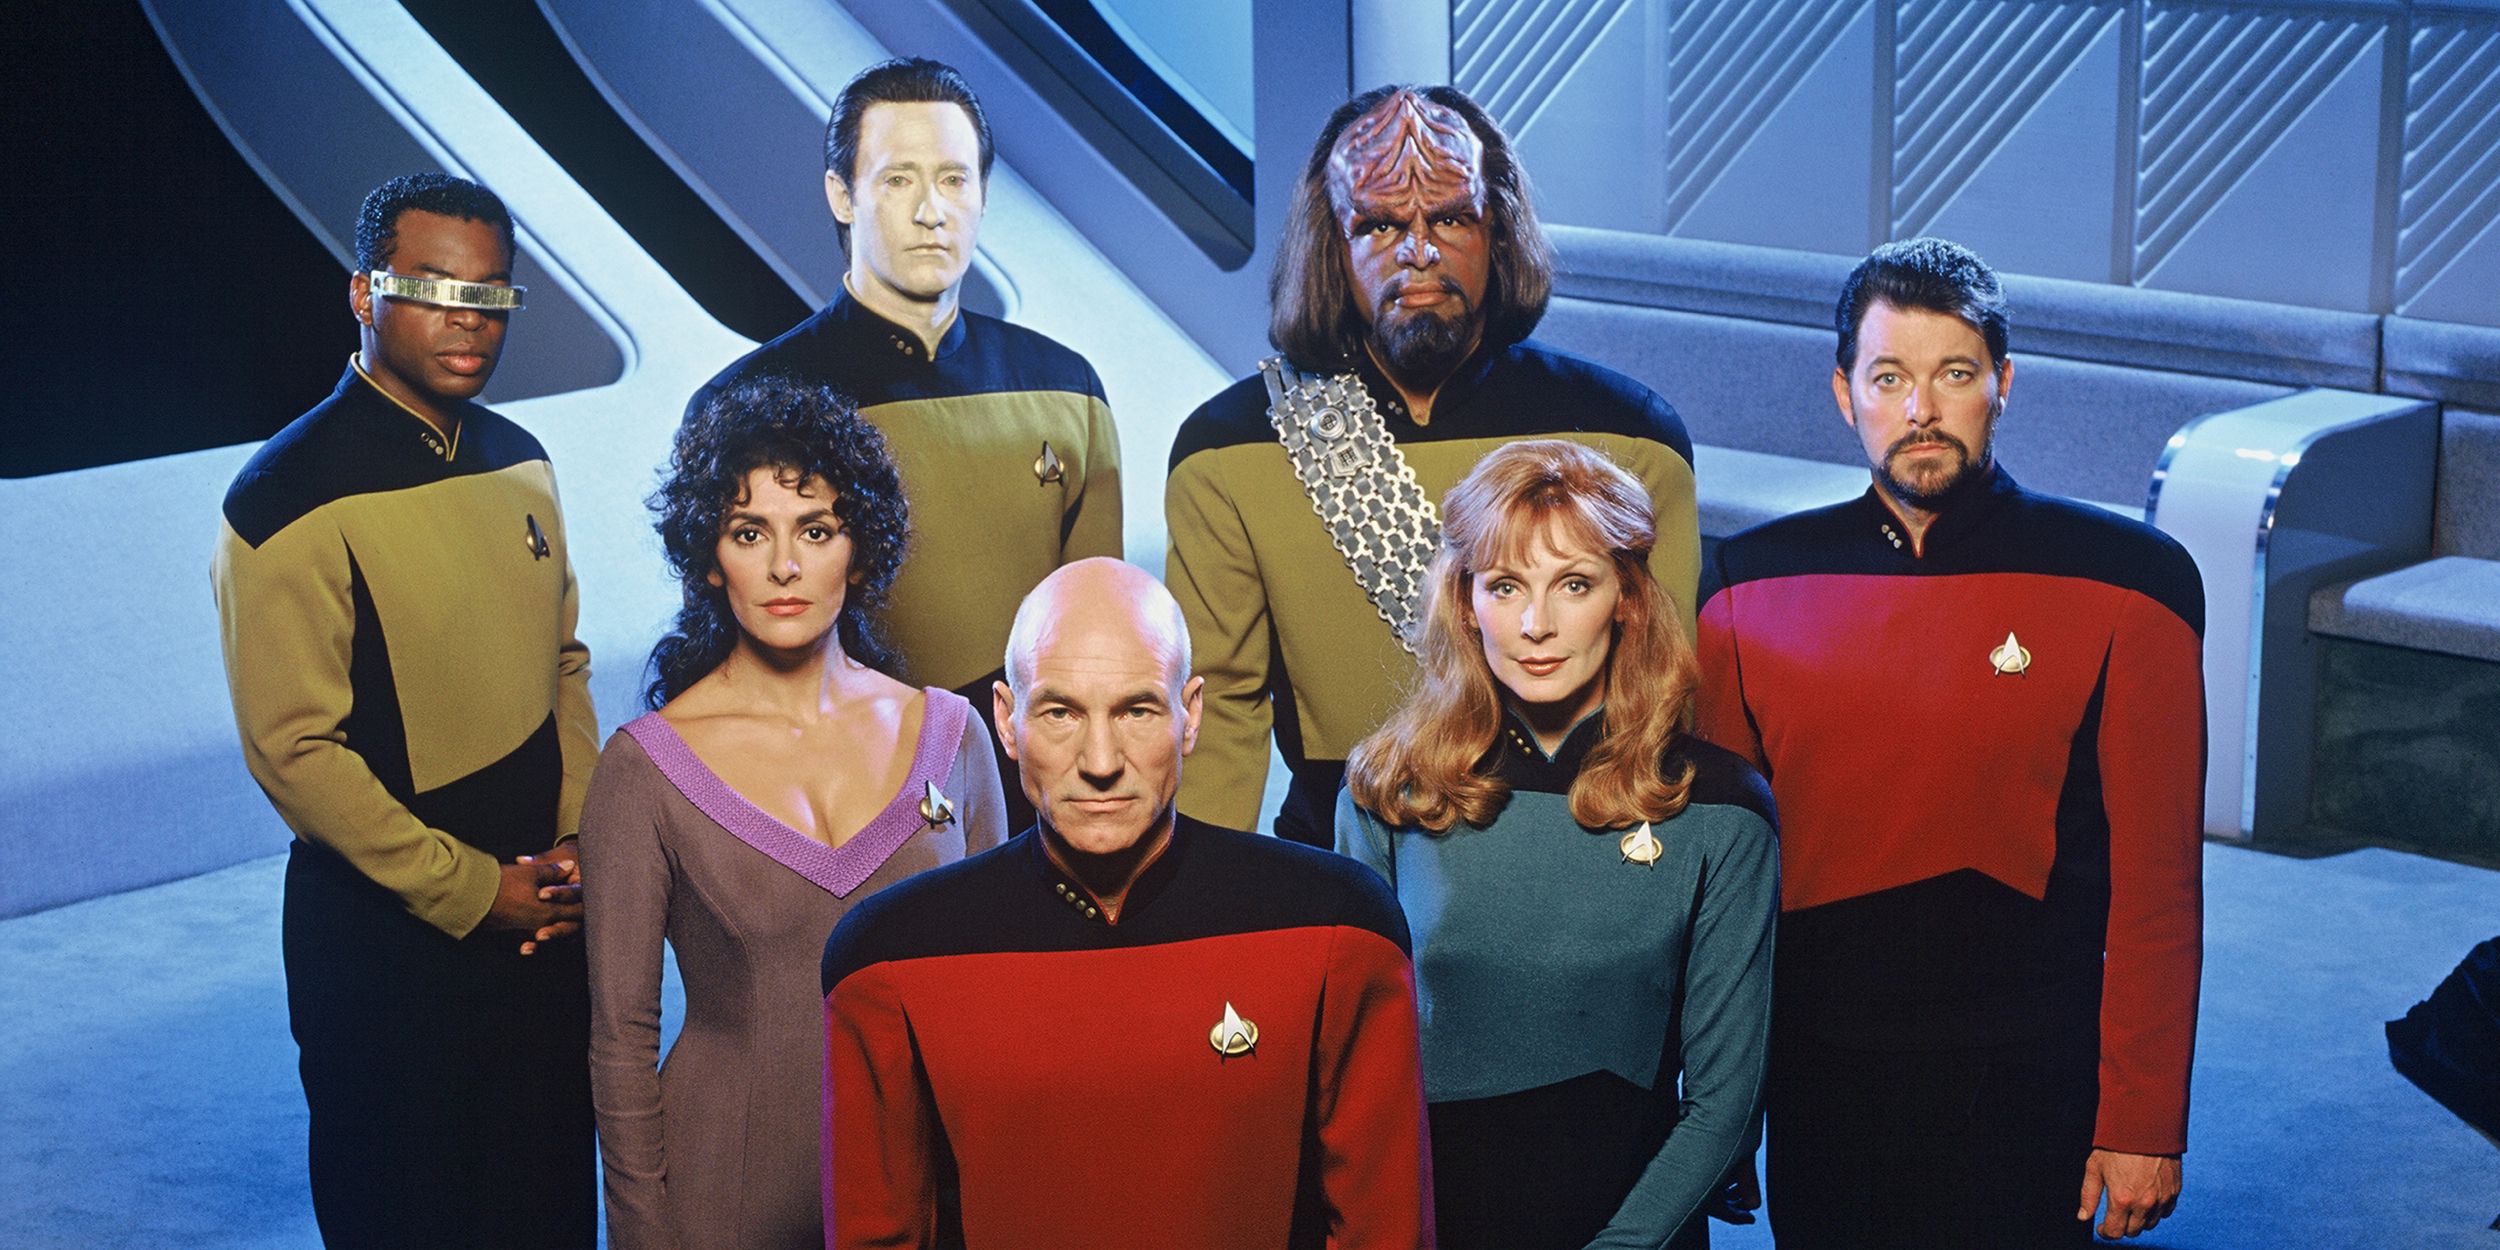 The crew of the Enterprise